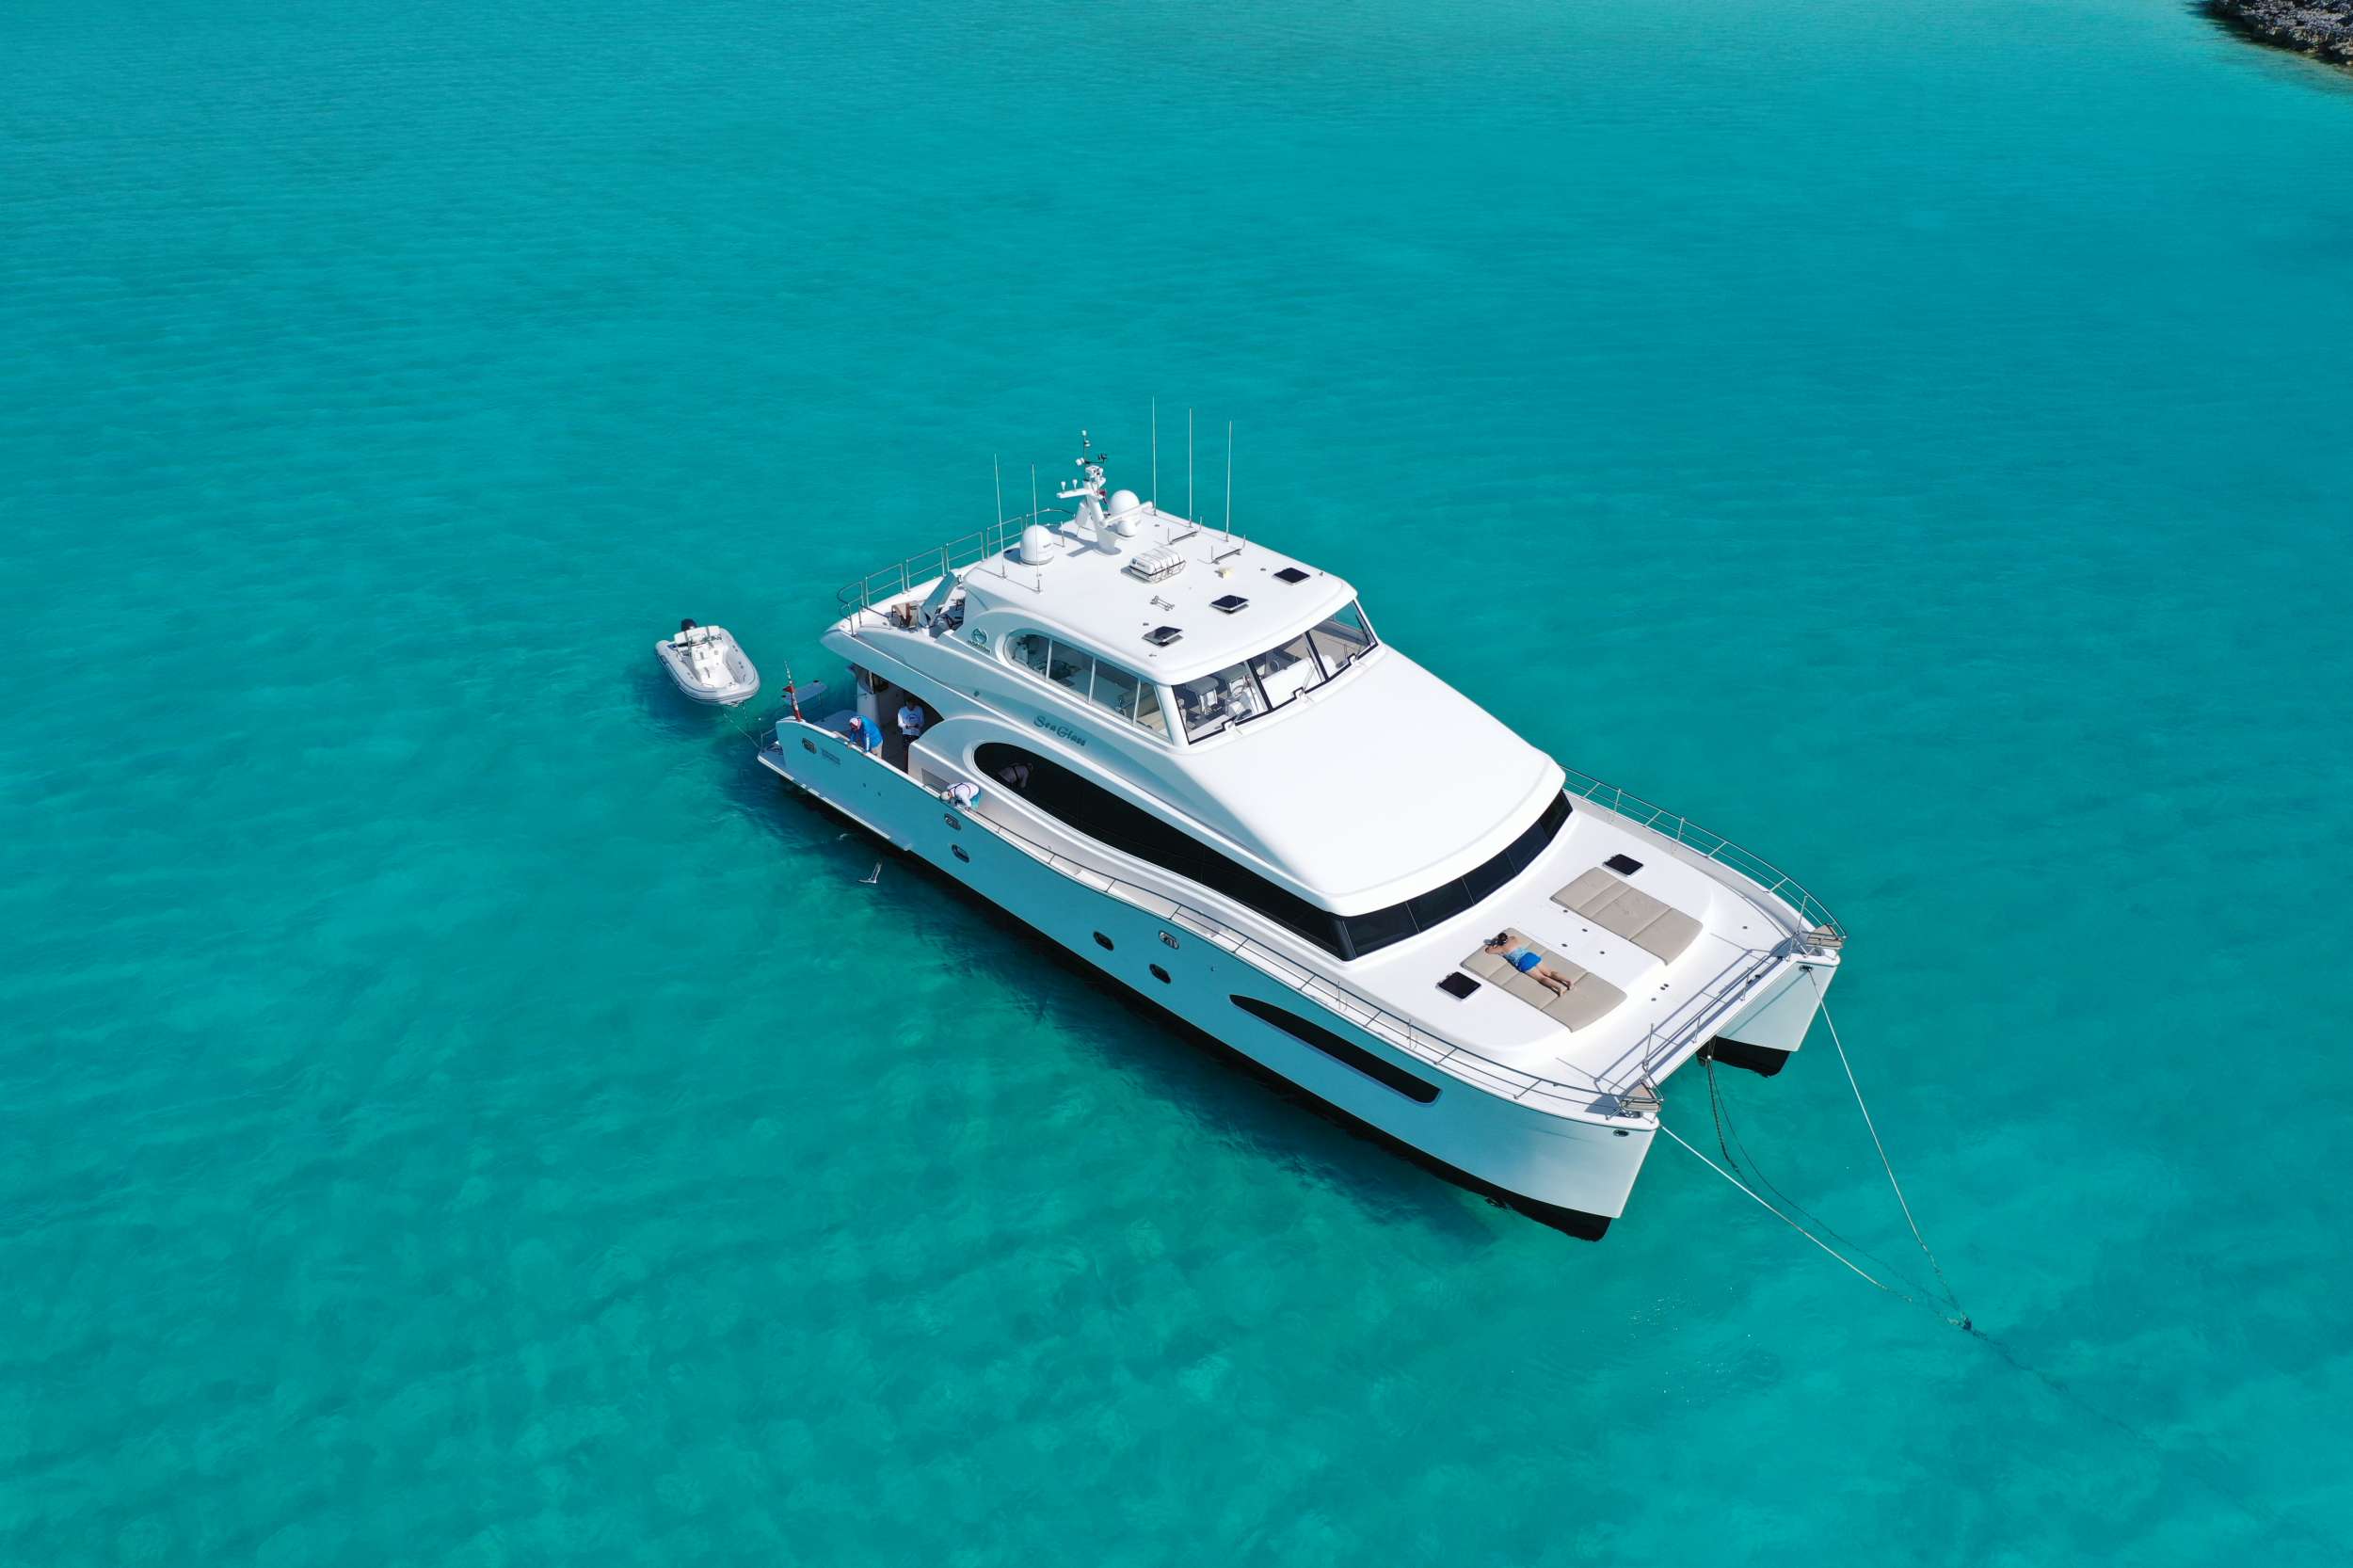 Seaglass Crewed Horizon 74 Powercat Charter Anchored in the Bahamas